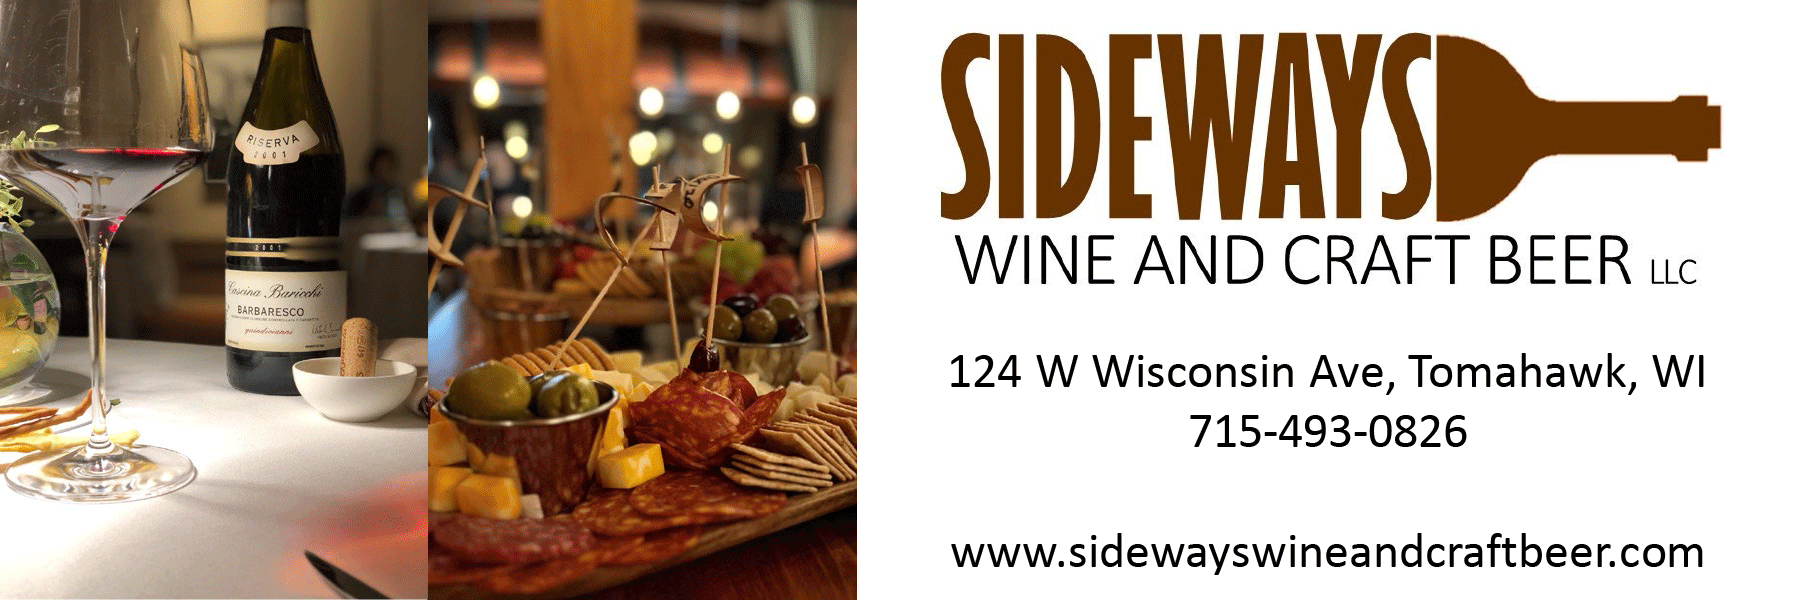 Sideways Wine and Craft Beer